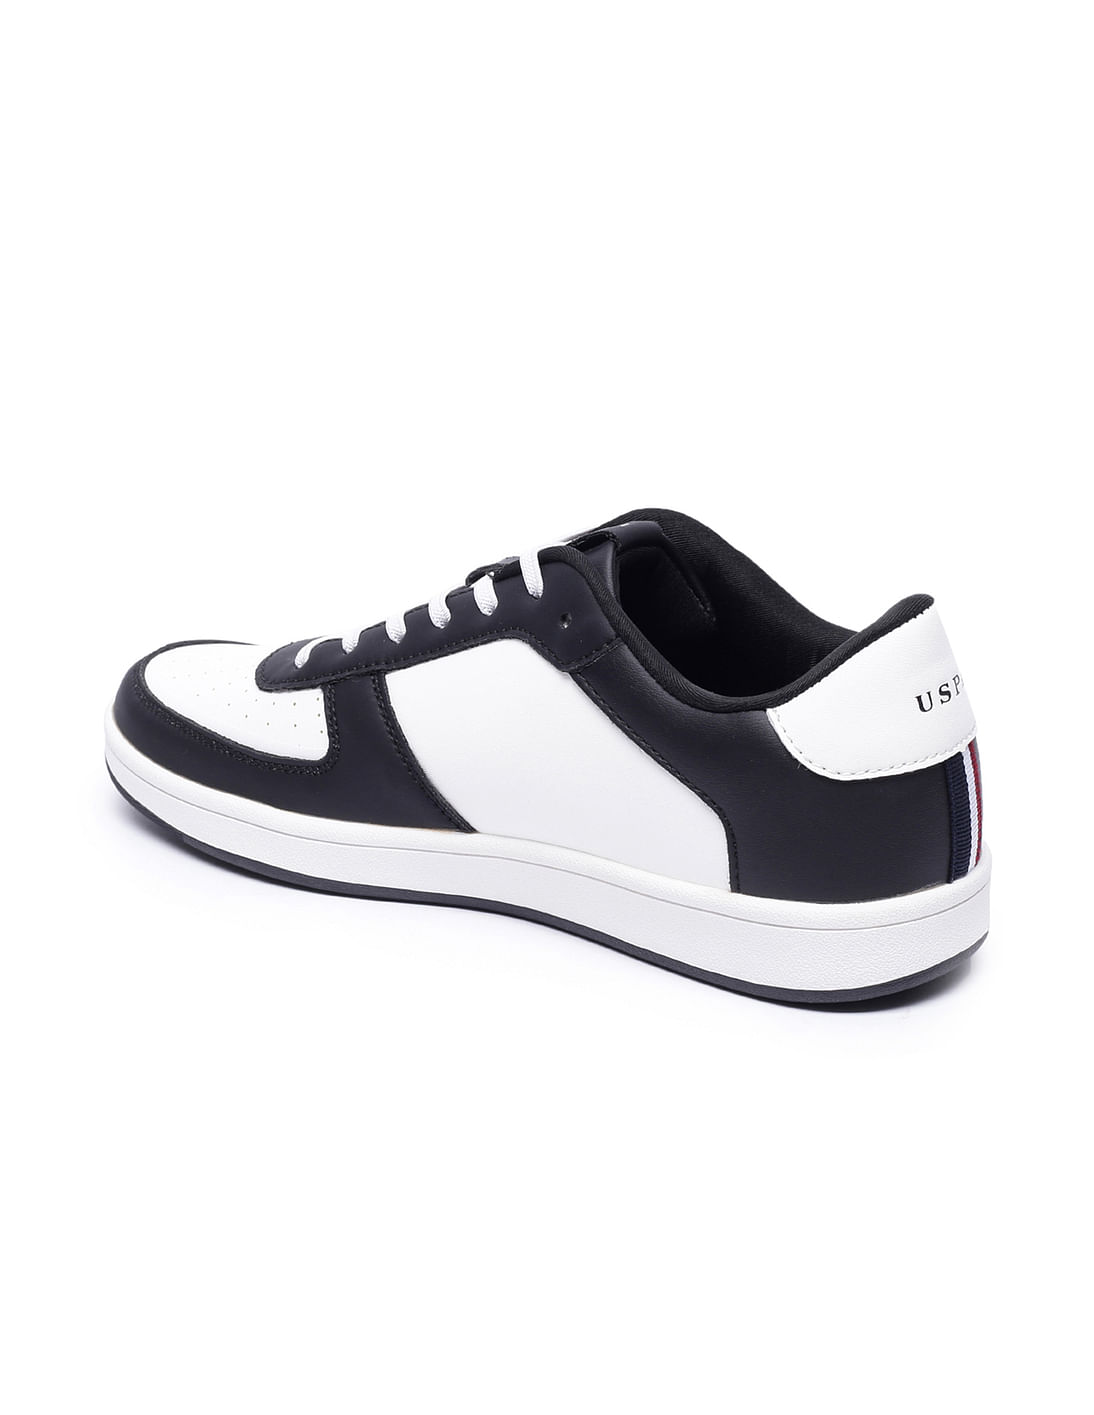 Buy Black Sneakers for Men by Starter Online | Ajio.com